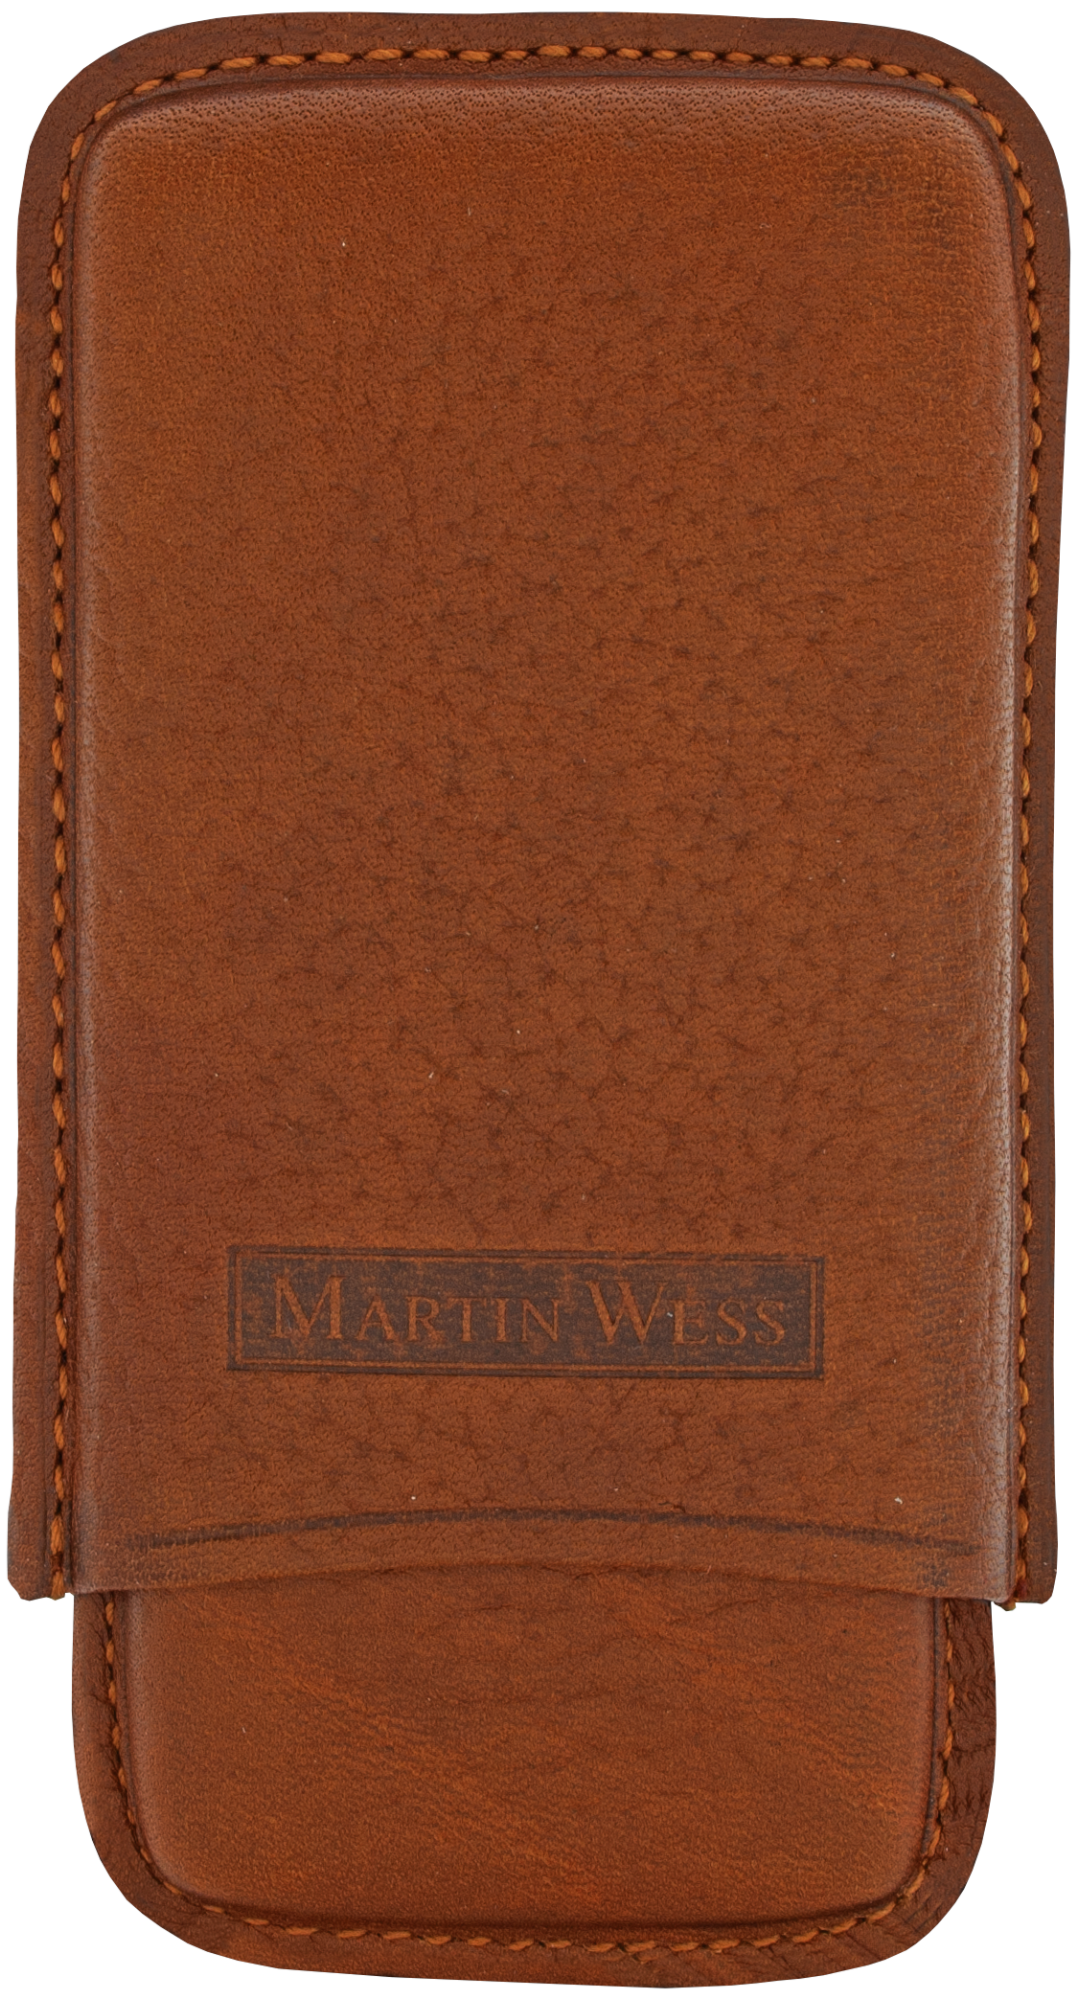 Martin Wess 505 Havanna - 5 Cigarillos